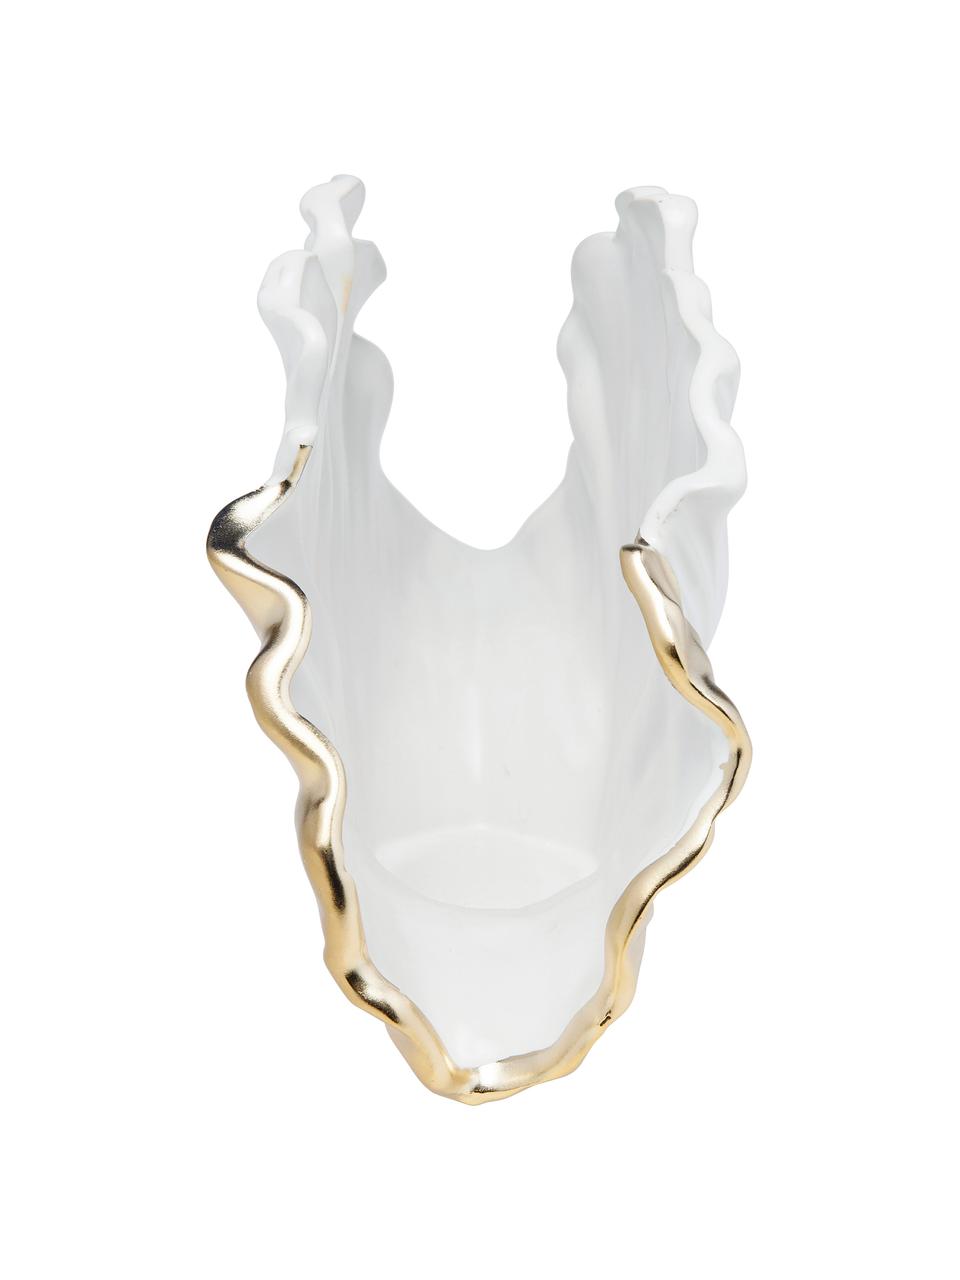 Design-Vase Ginkgo Elegance aus Keramik, Keramik, glasiert, Weiß, Goldfarben, B 26 x H 18 cm